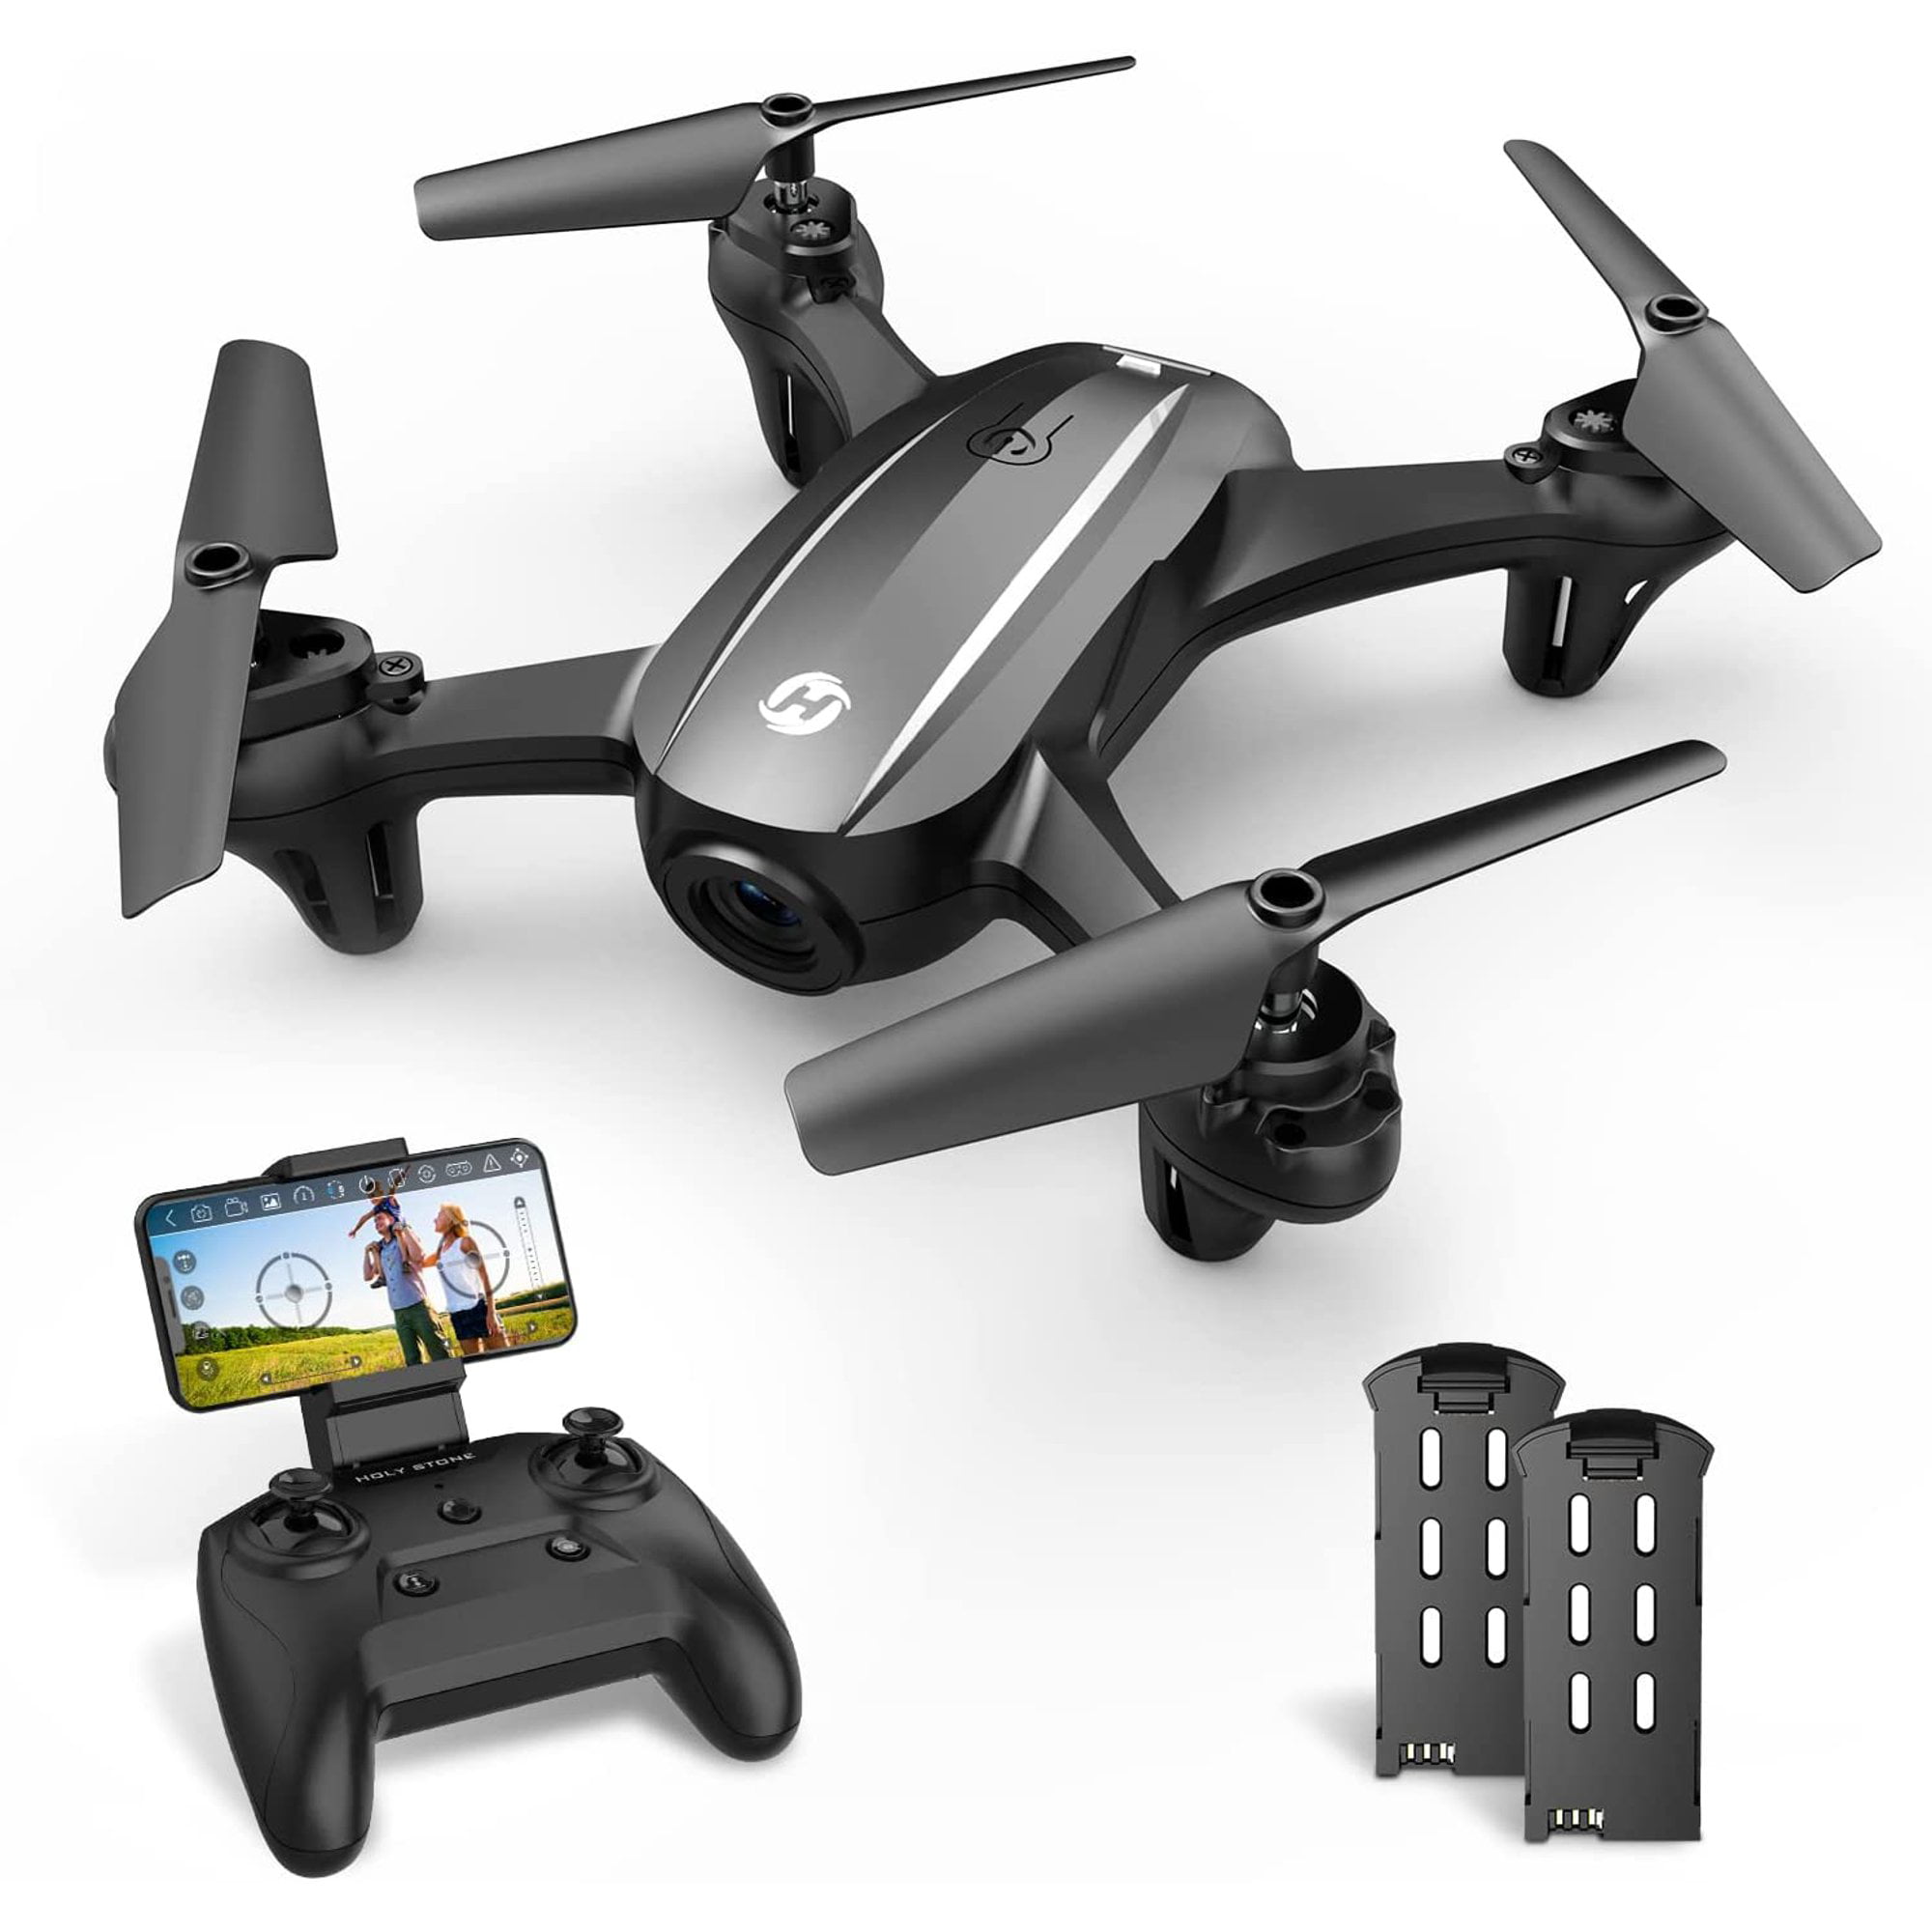 Hot Wheels Bladez Skytrackz VR Drone RC With WIFI Camera Headset Controller App 